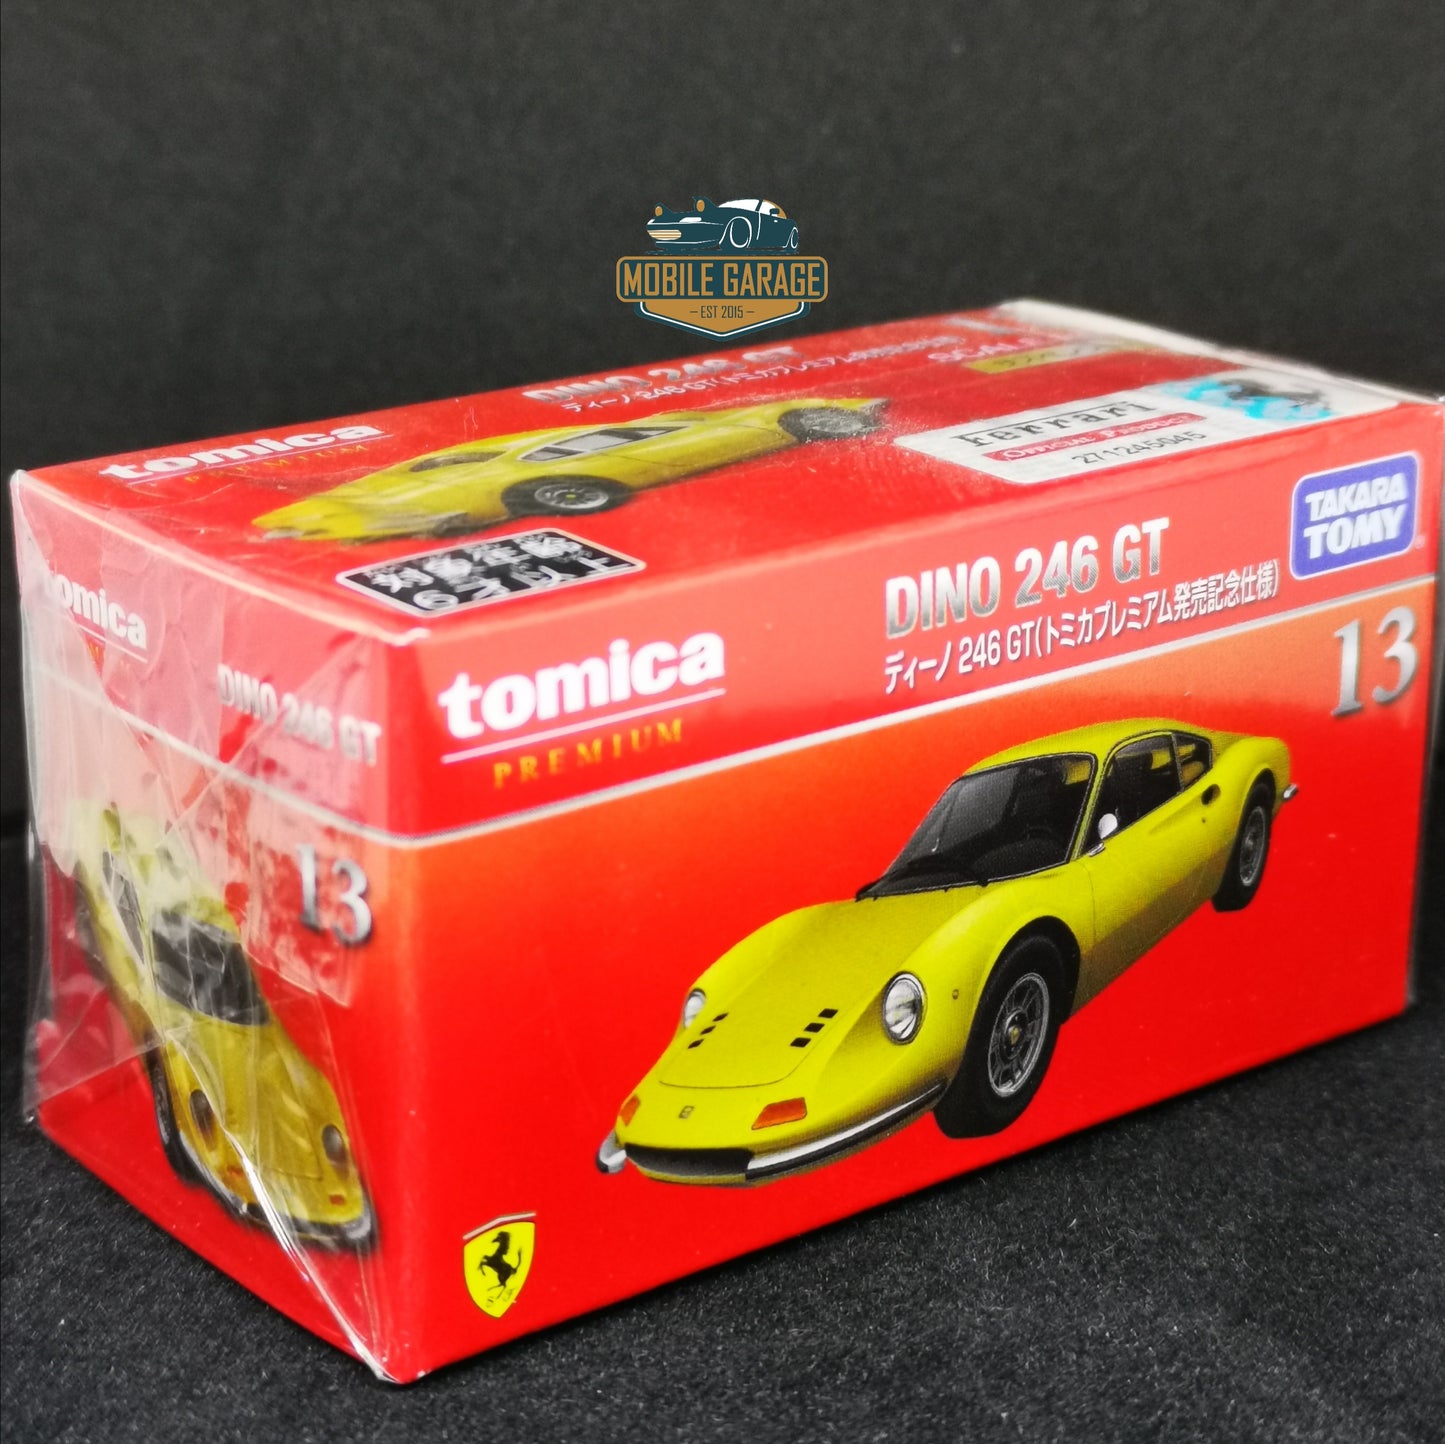 Tomica Premium No.13 Ferrari Dino 246 GT 1st Edition